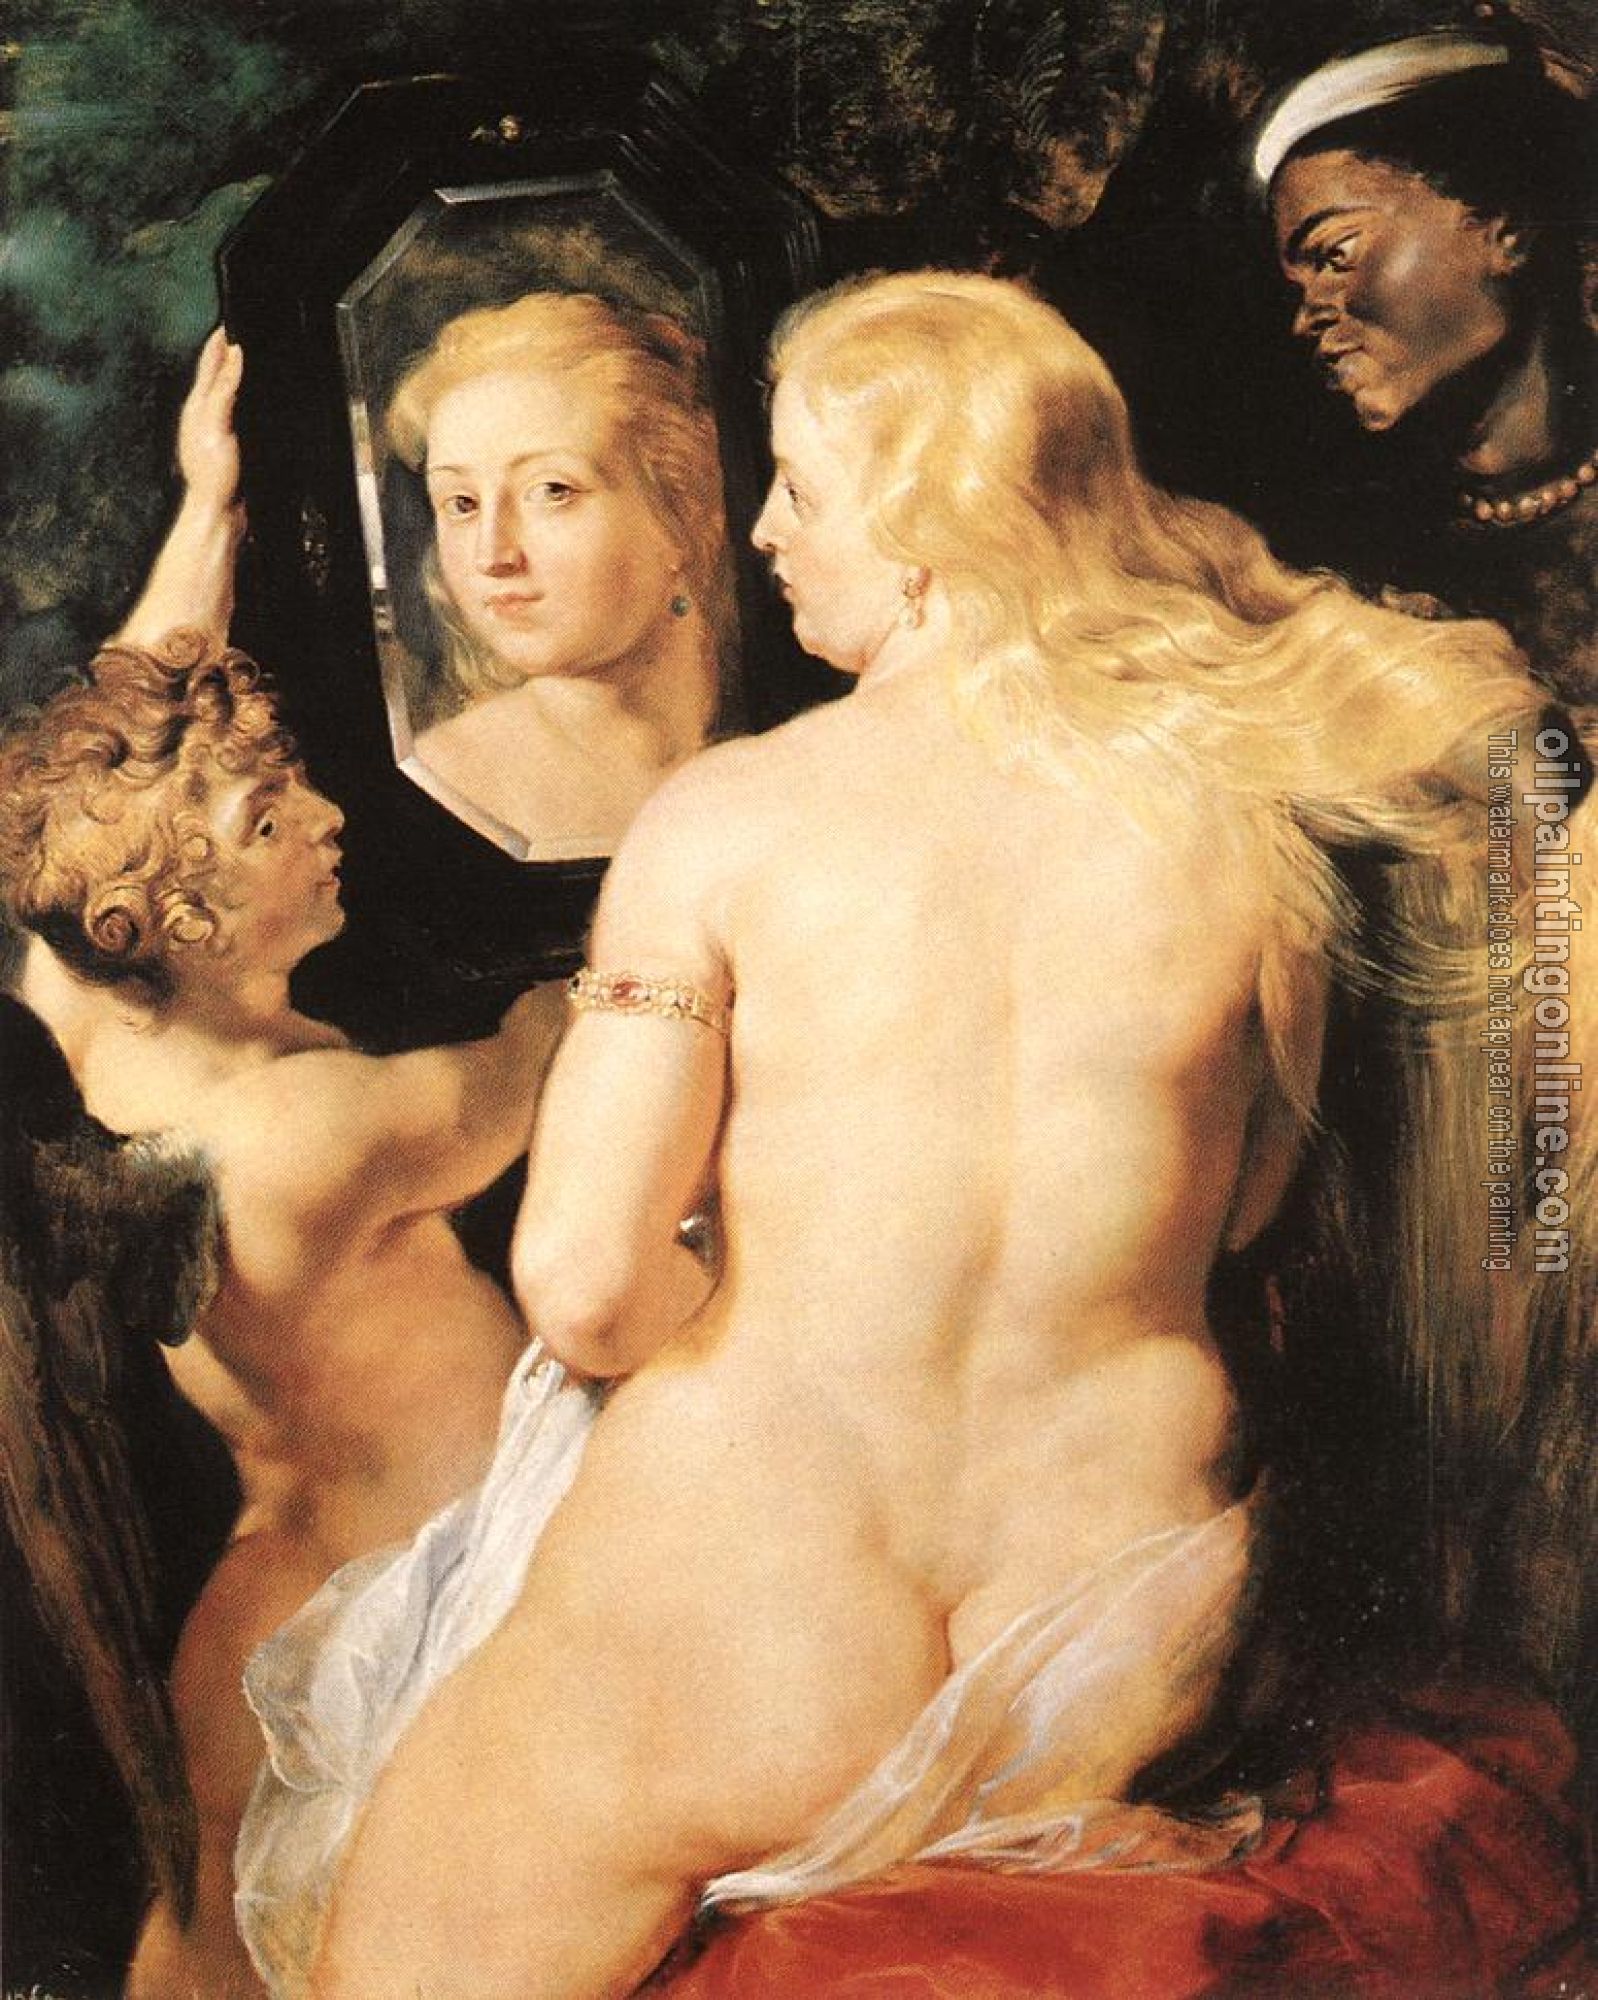 Rubens, Peter Paul - Venus at a Mirror